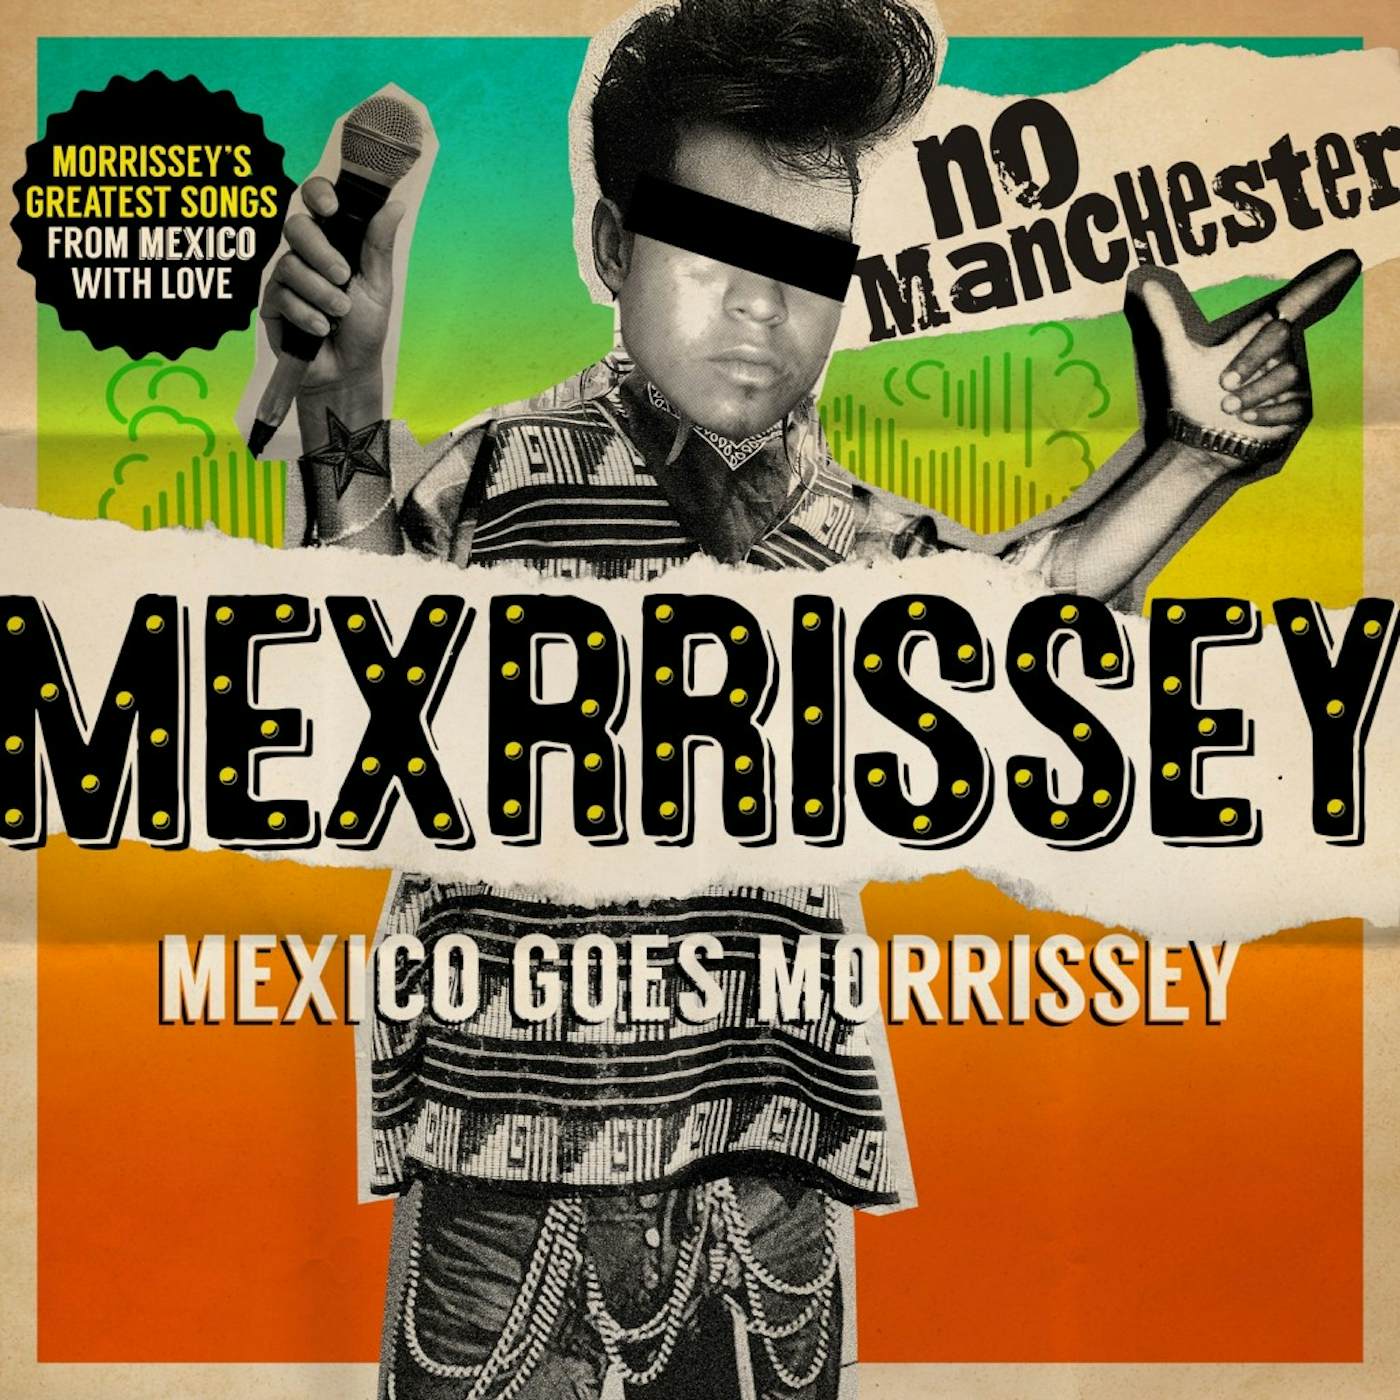 Mexrrissey NO MANCHESTER CD